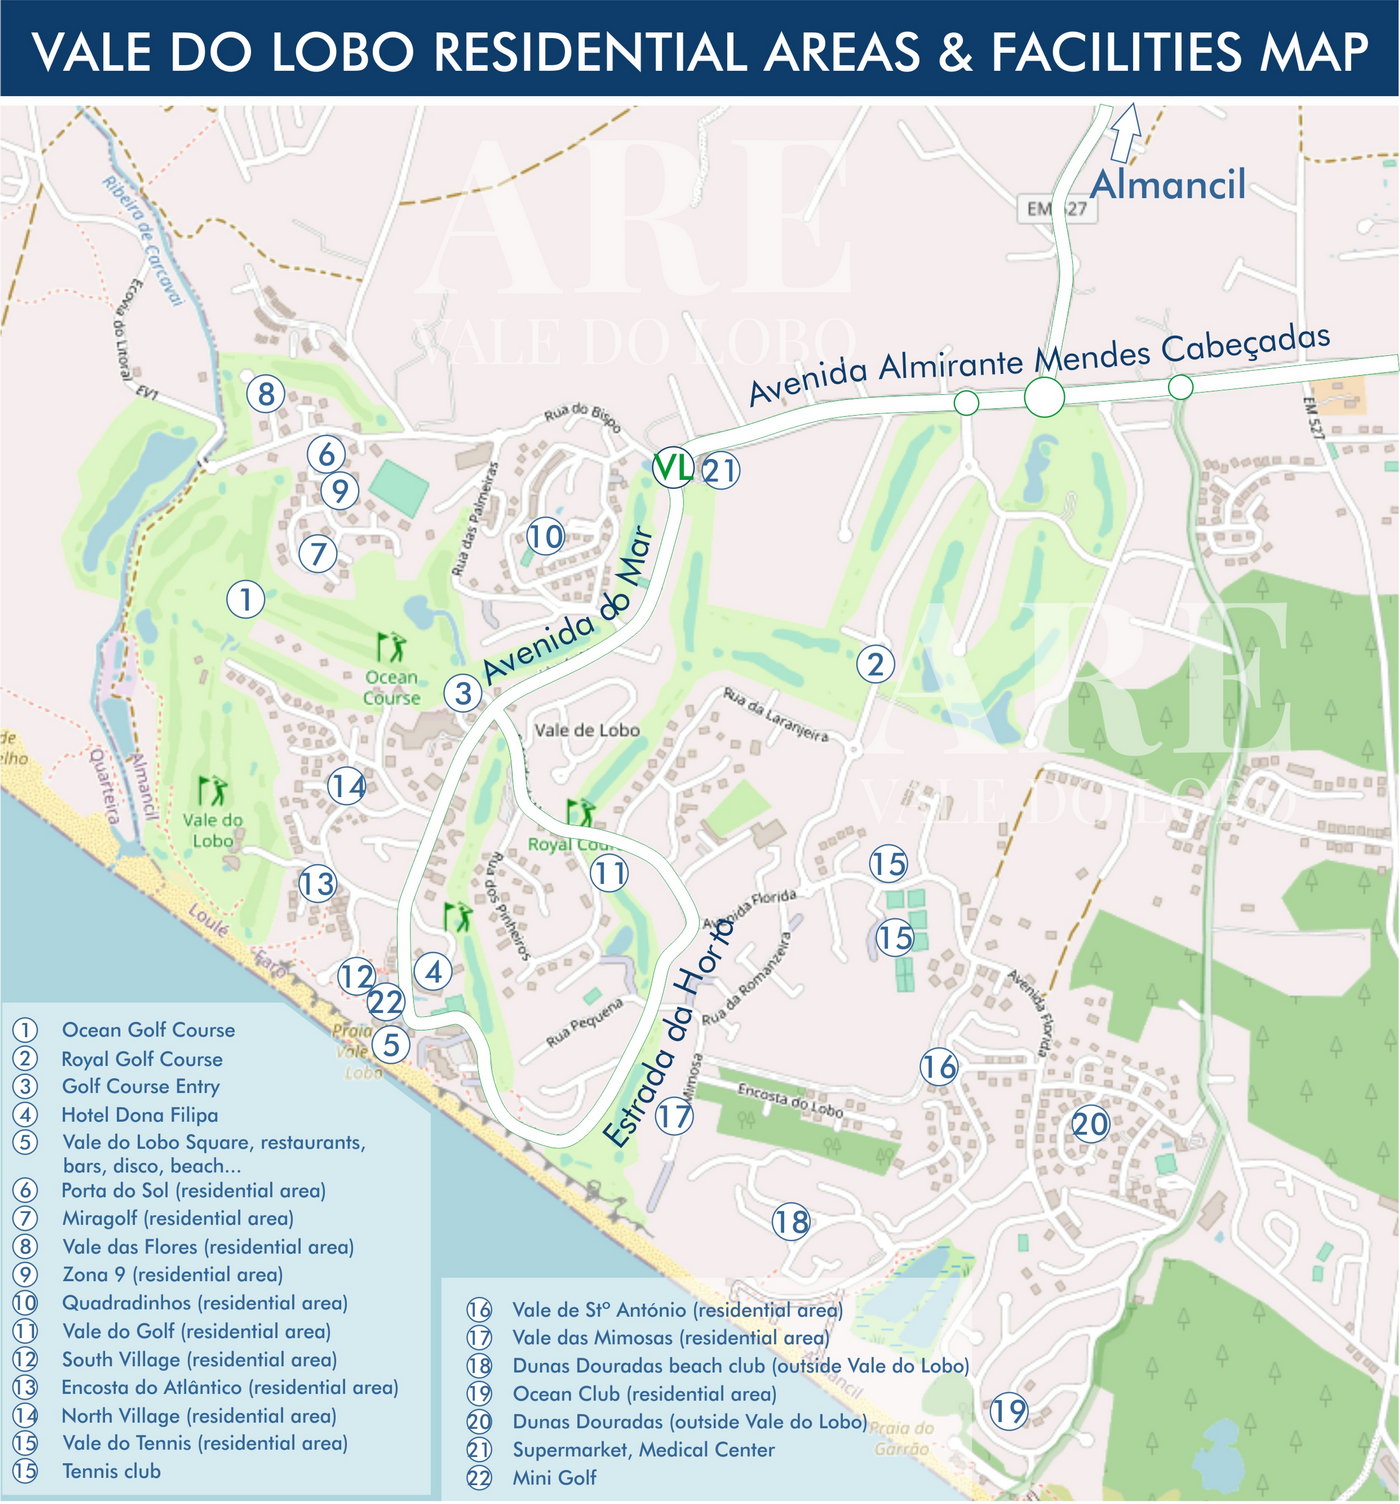 Resumen del mapa de Vale do Lobo Resort